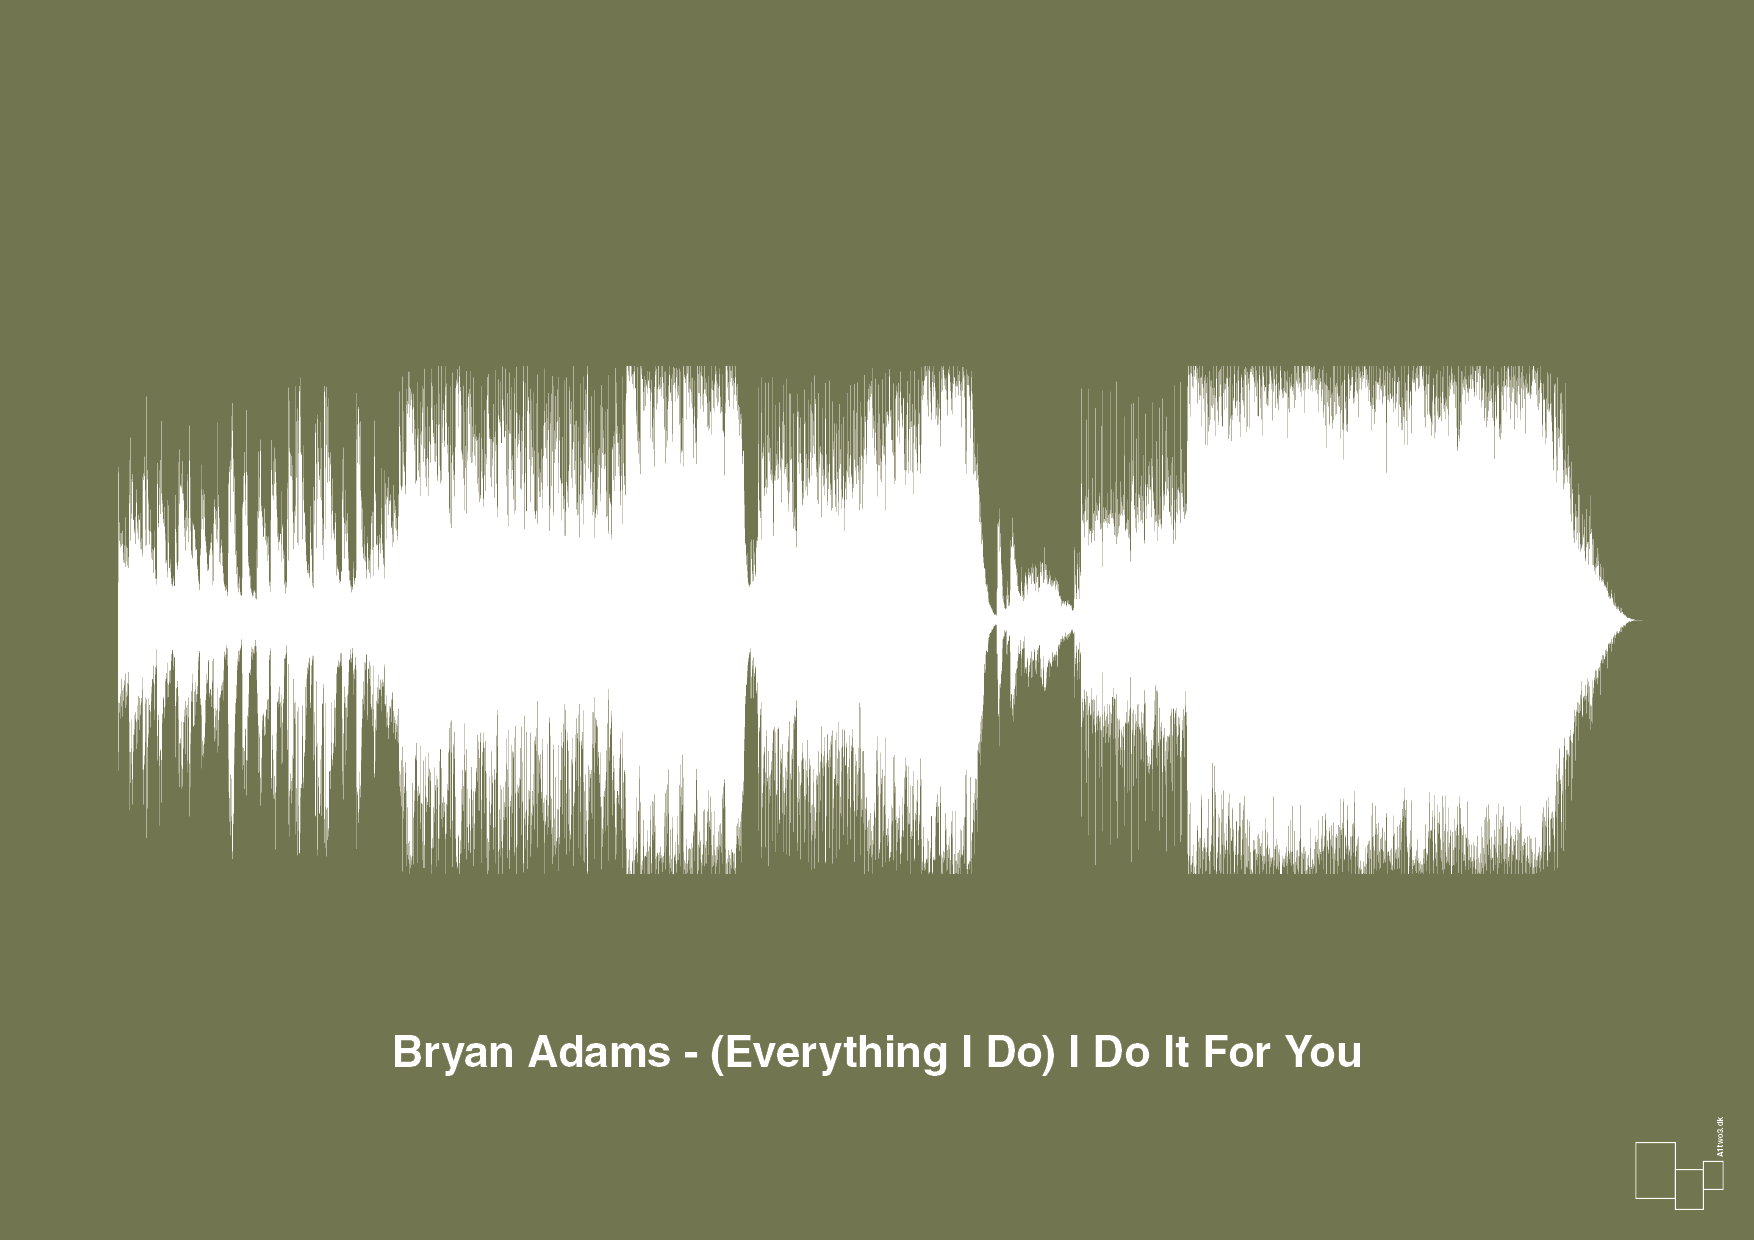 bryan adams - (everything i do) i do it for you - Plakat med Musik i Secret Meadow